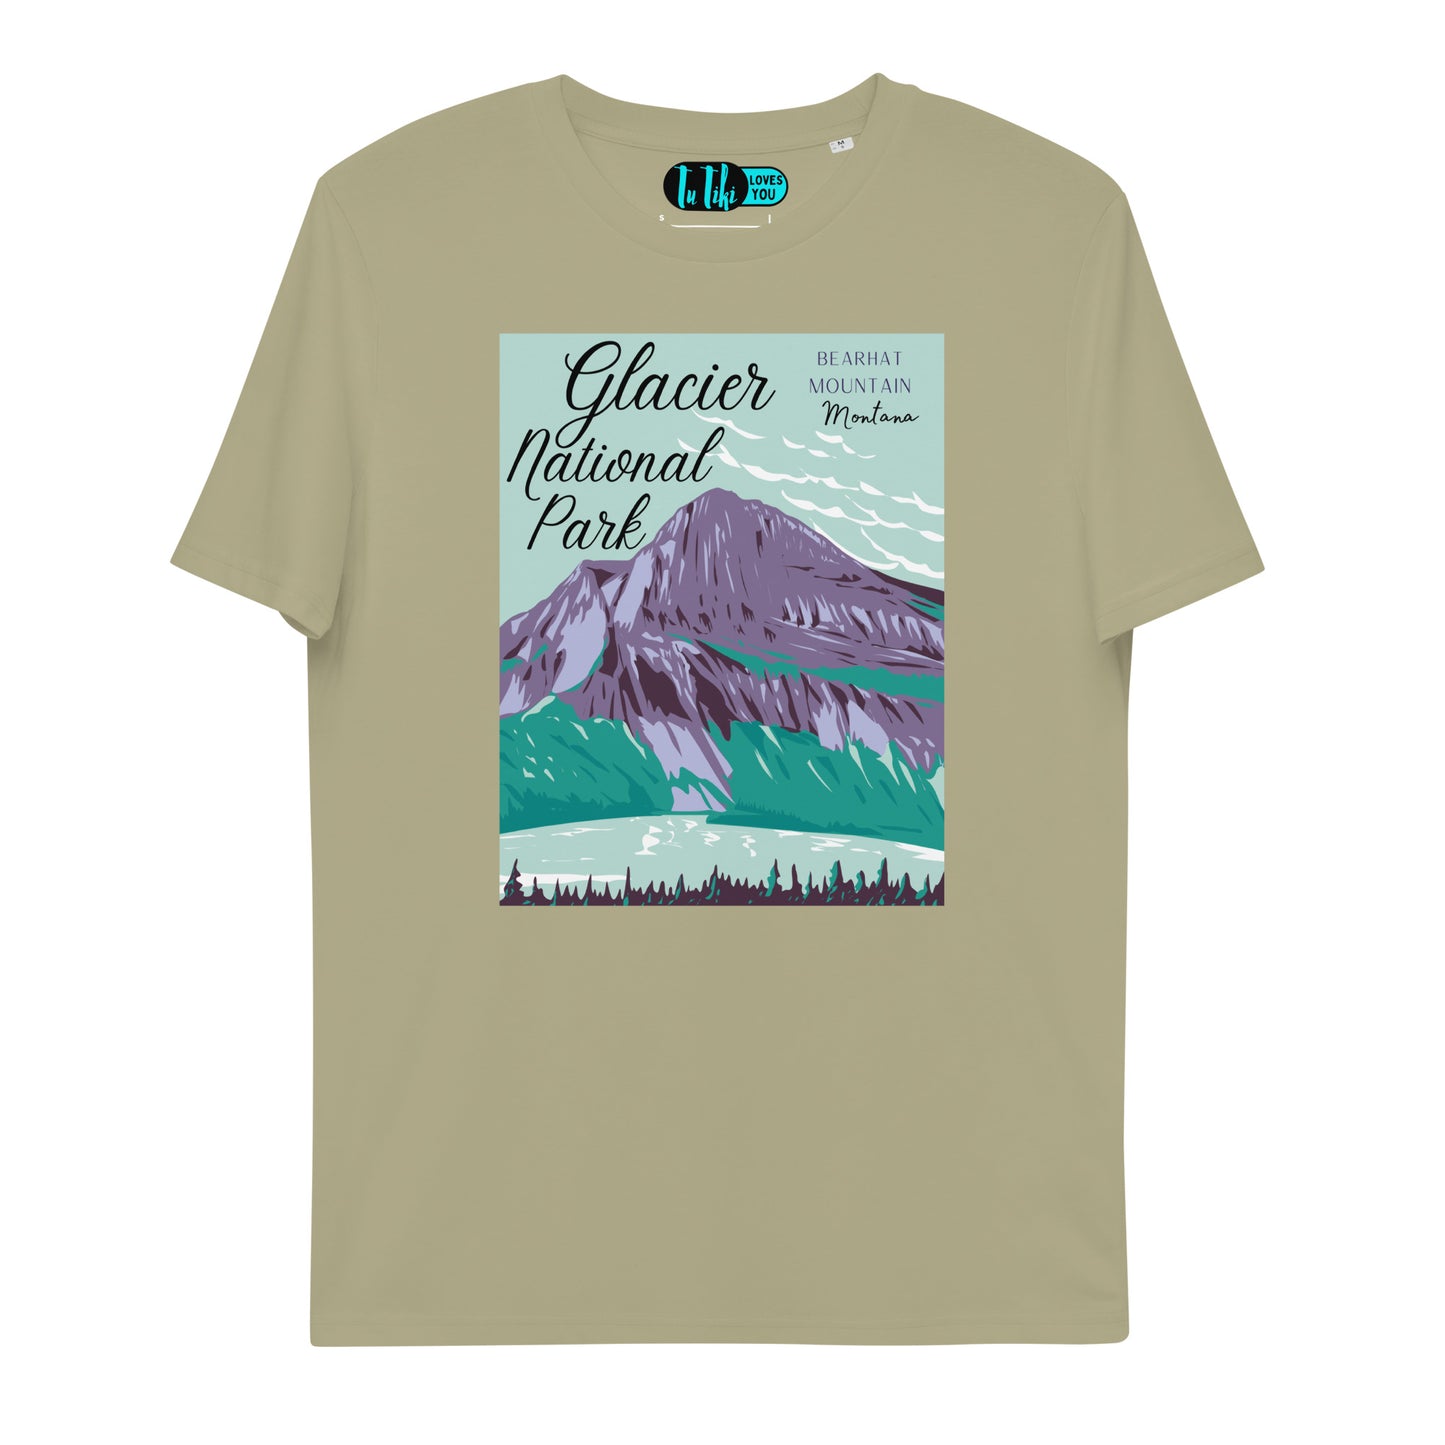 Organic Cotton GLACIER National Park Classic Tee: Bearhat Mountain